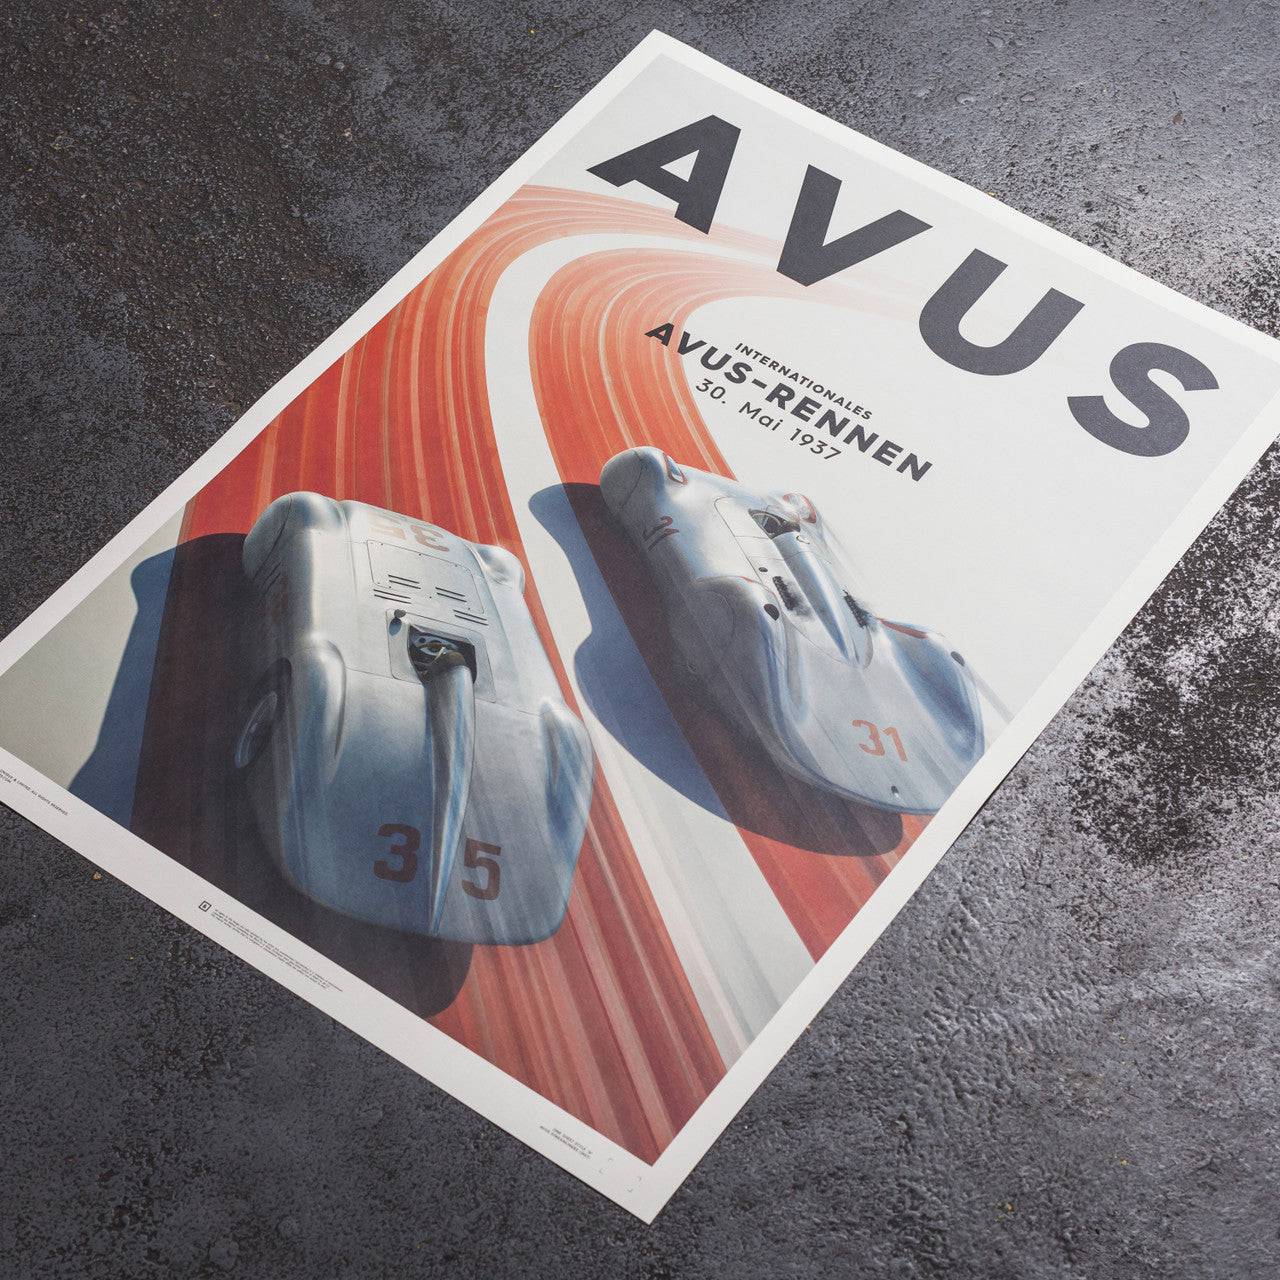 Mercedes Benz & Auto Union  - Silver - Avus - 1937 - Poster